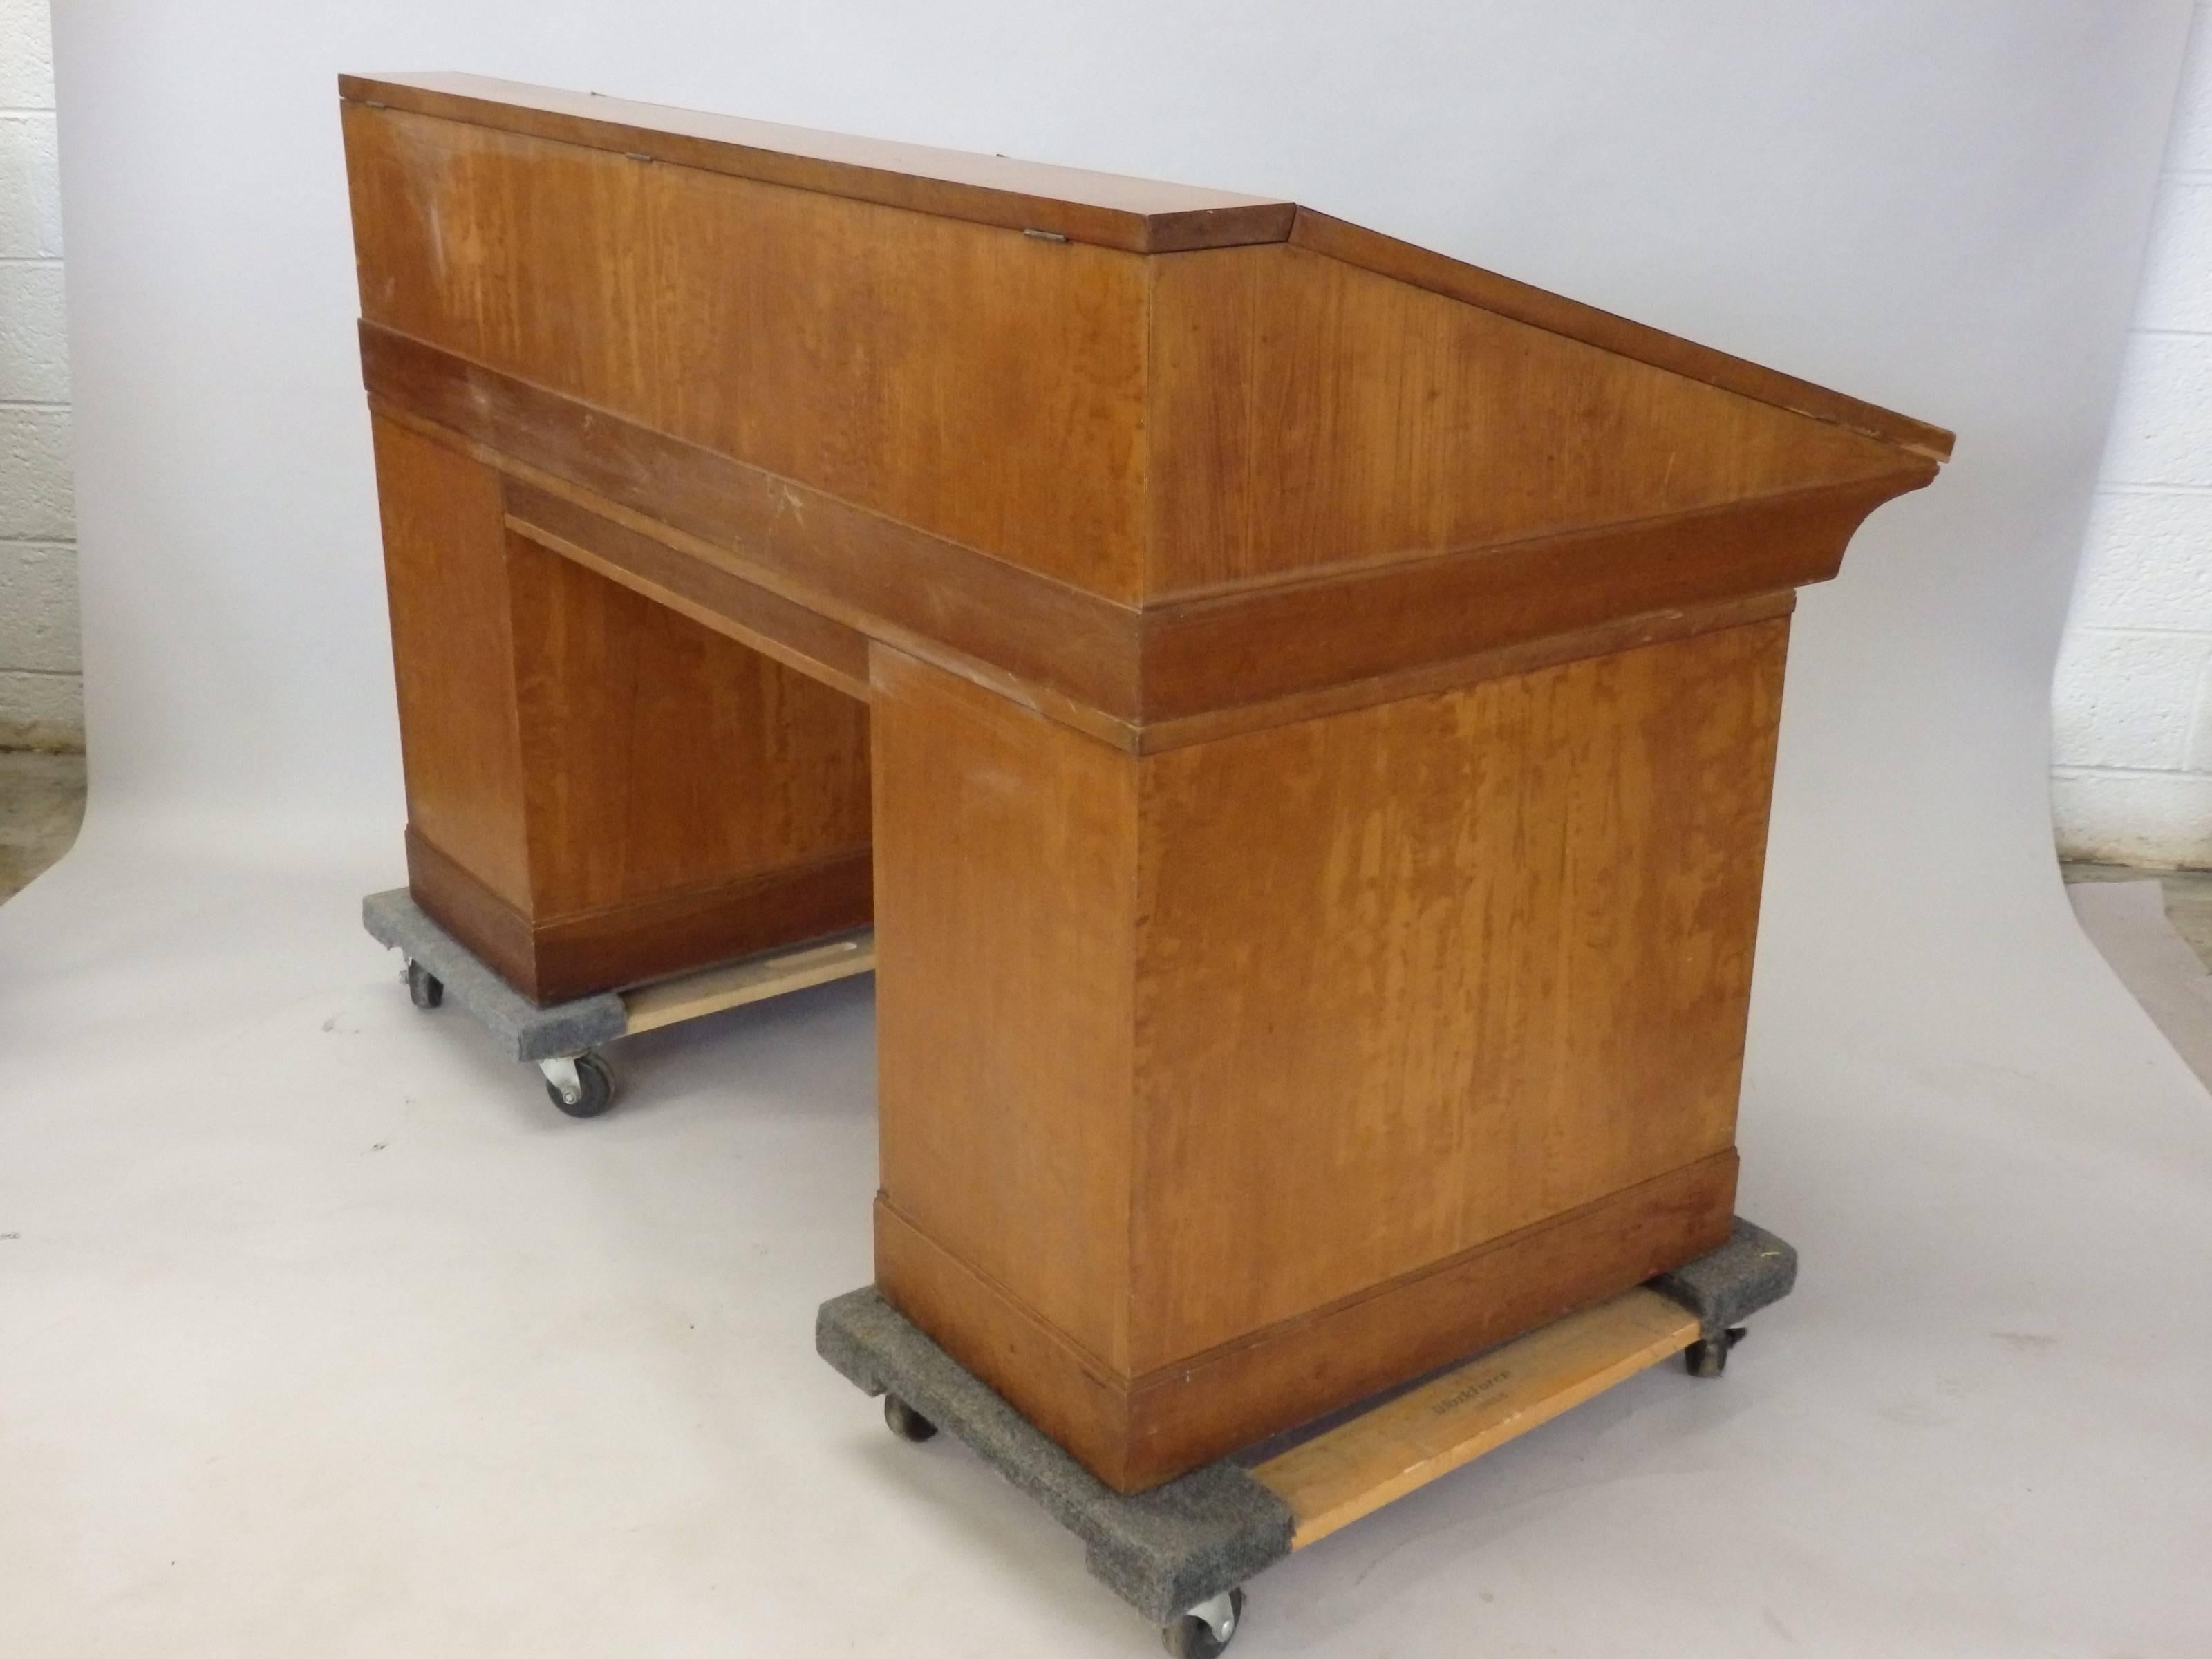 Johann Tapp Custom Built Art Deco era Cartoonist Desk with Hidden Compartments In Good Condition For Sale In Ferndale, MI